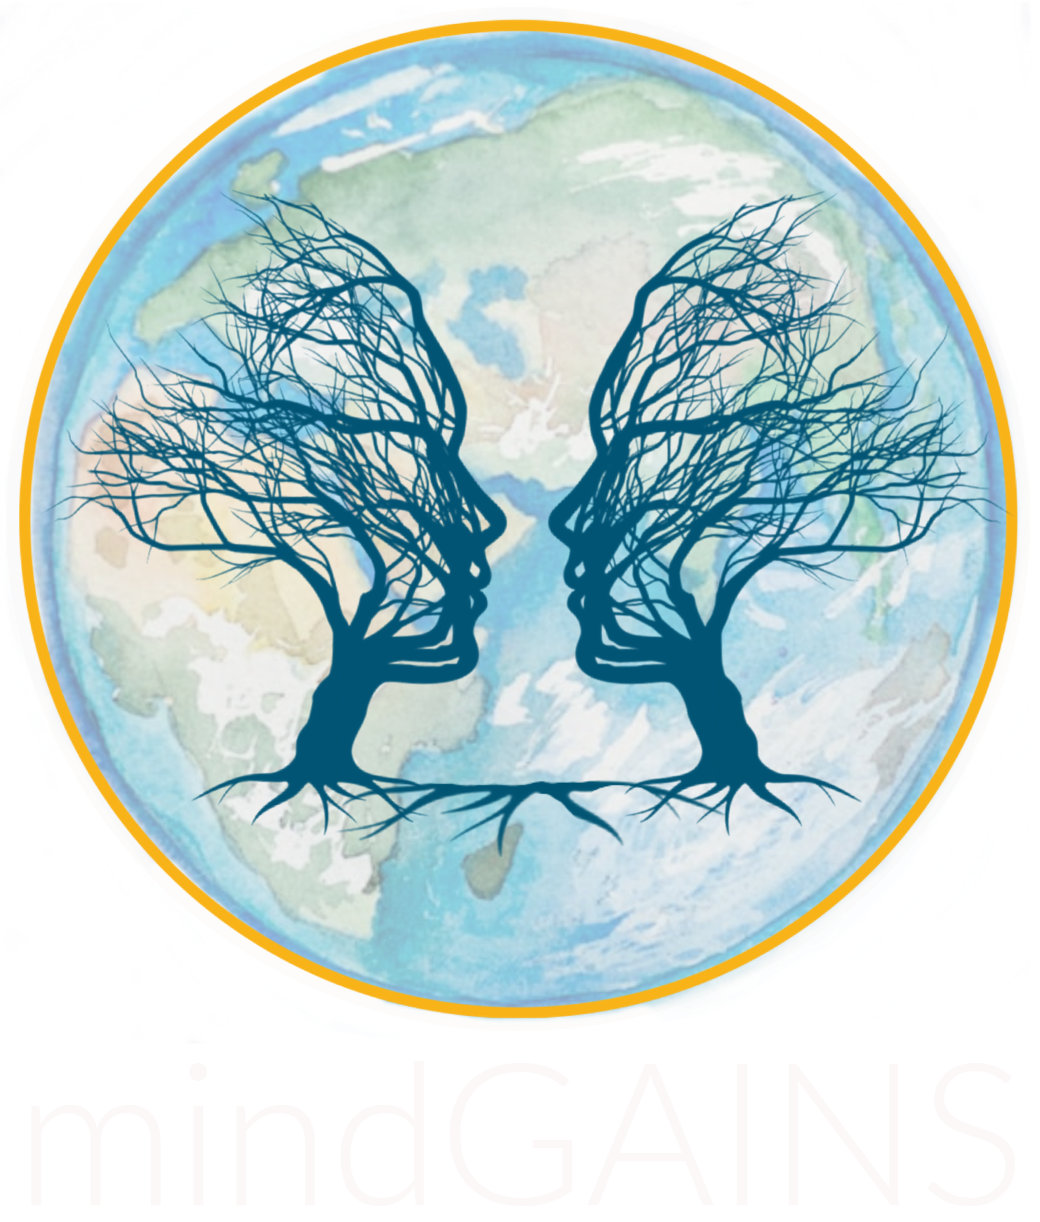 GAINS logo